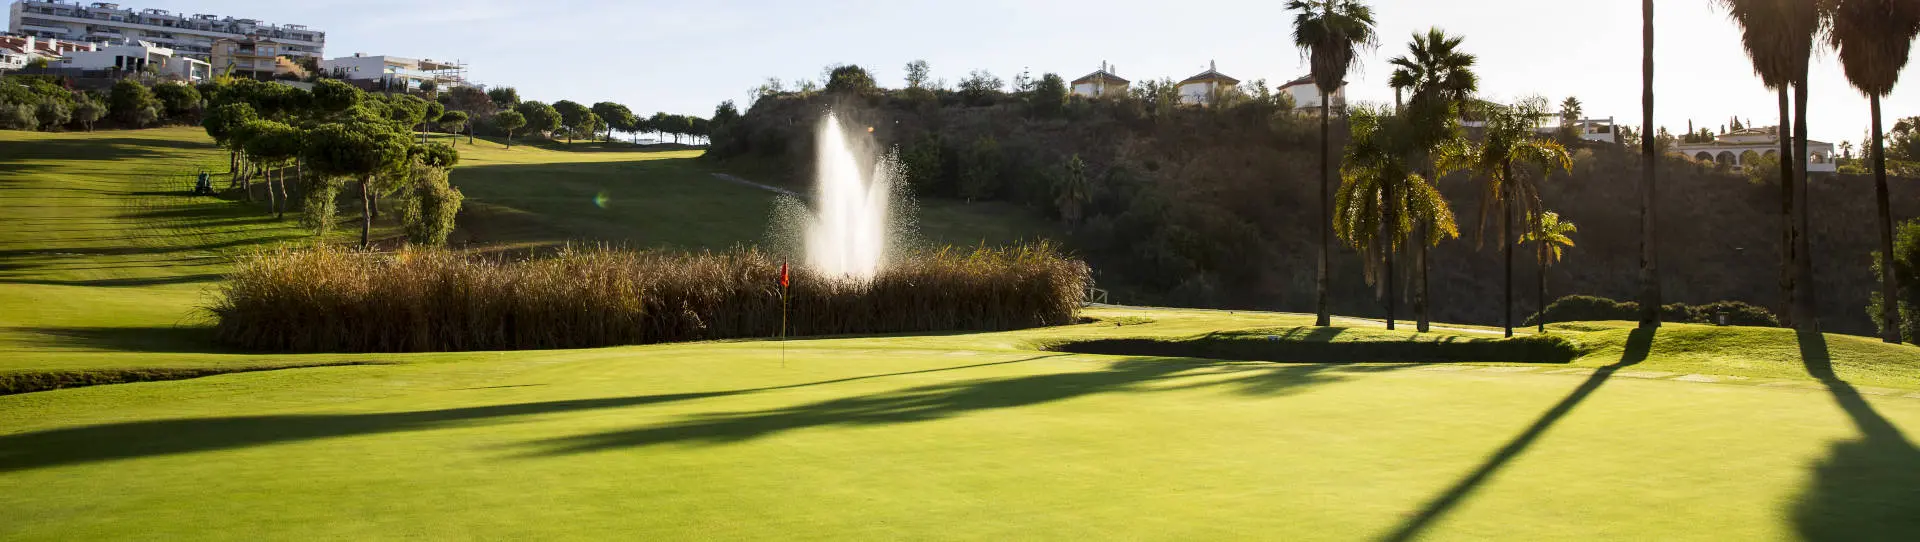 Spain golf courses - Añoreta Golf course - Photo 1